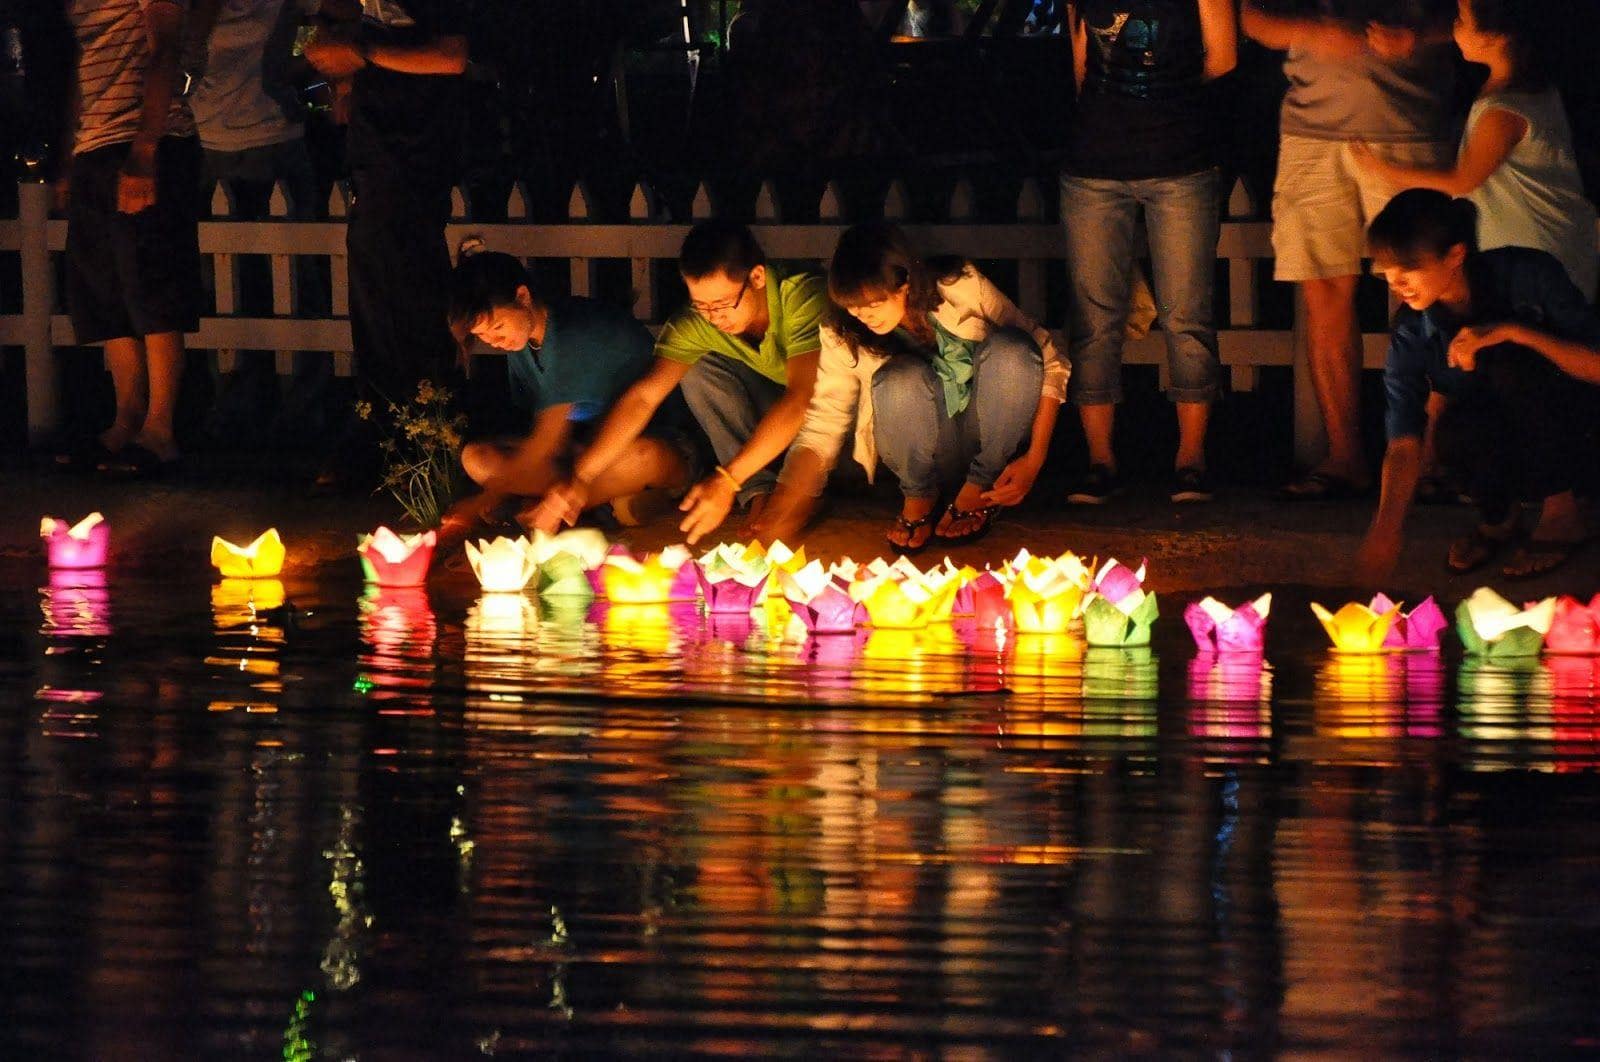 Hoa dang hoian lantern festival culture